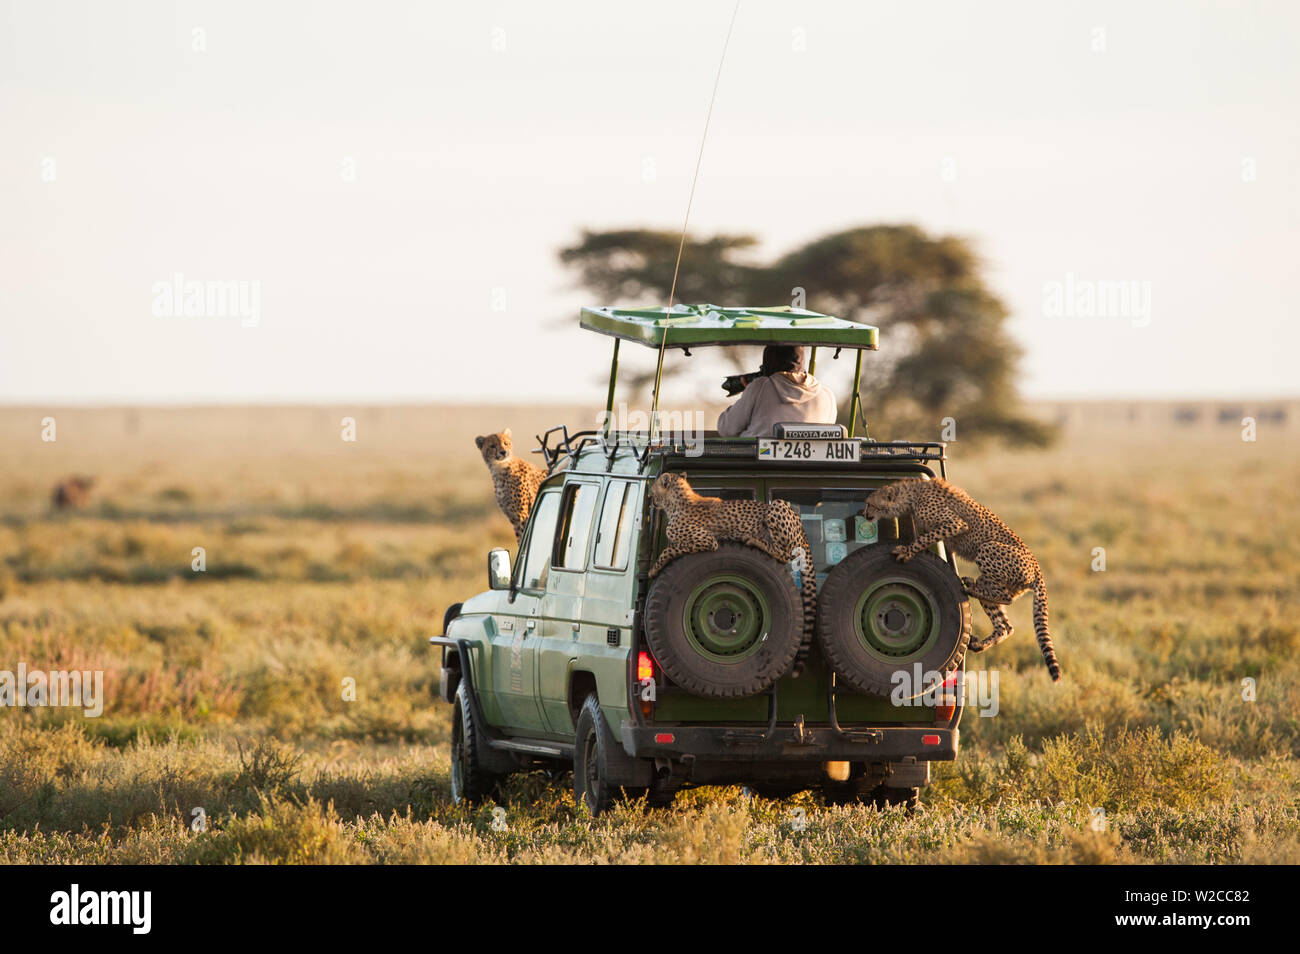 Safari vehicle with tourist and wildlife cheetah on vehicle Serengeti , Tanzania Stock Photo